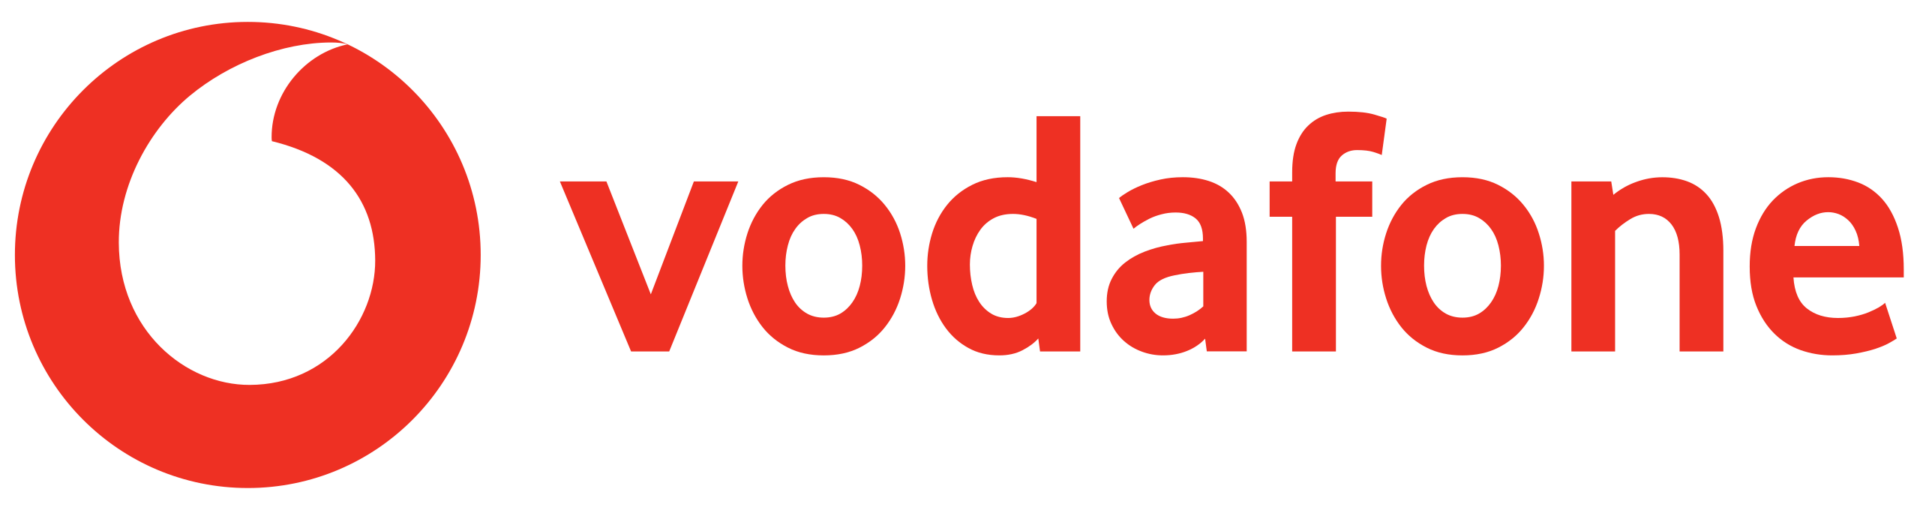 Vodafone_2017_logo.svg (002)